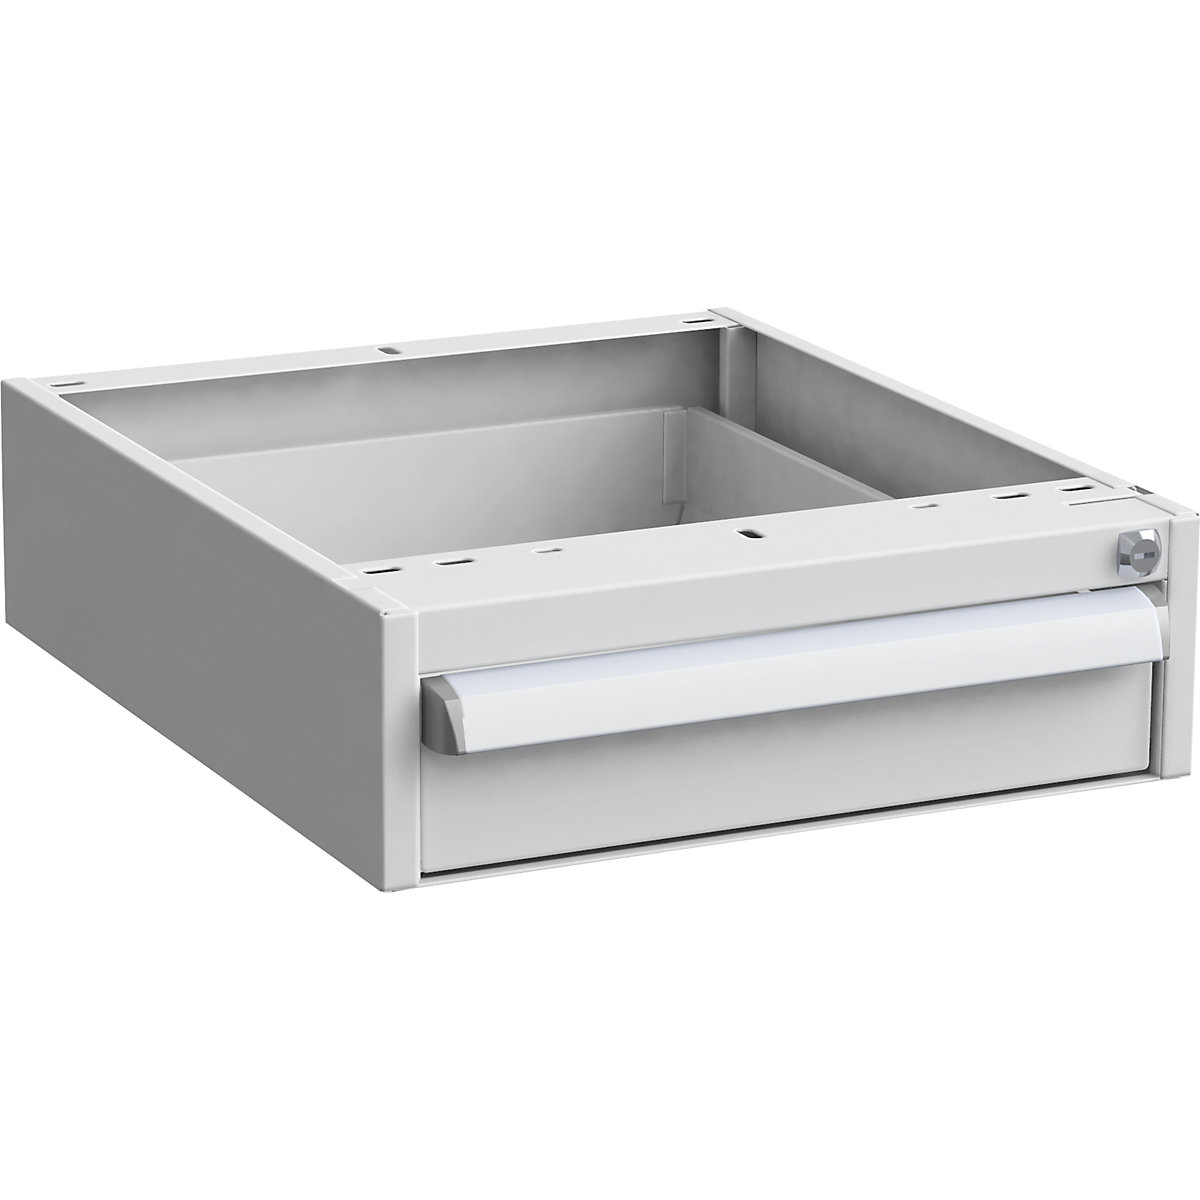 Suspended drawer unit – Treston